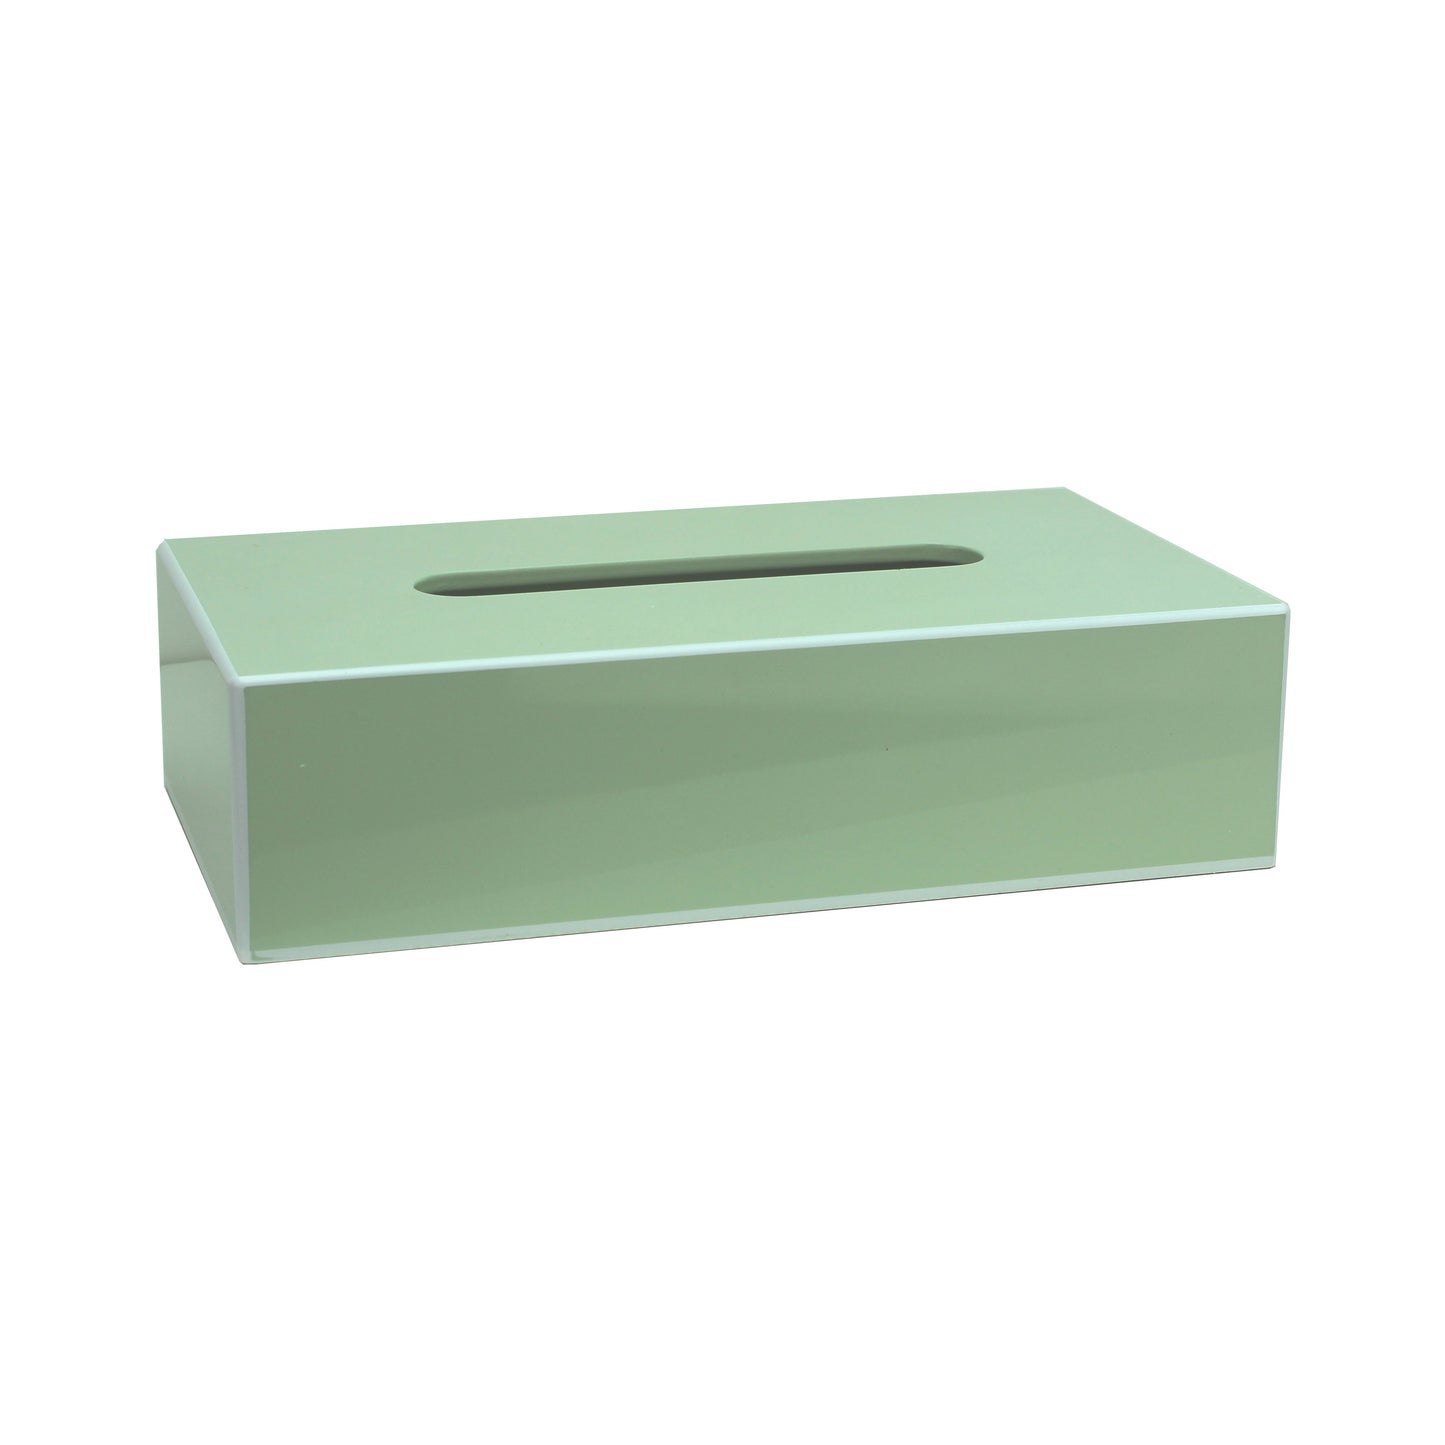 Mint Rectangular Tissue Box